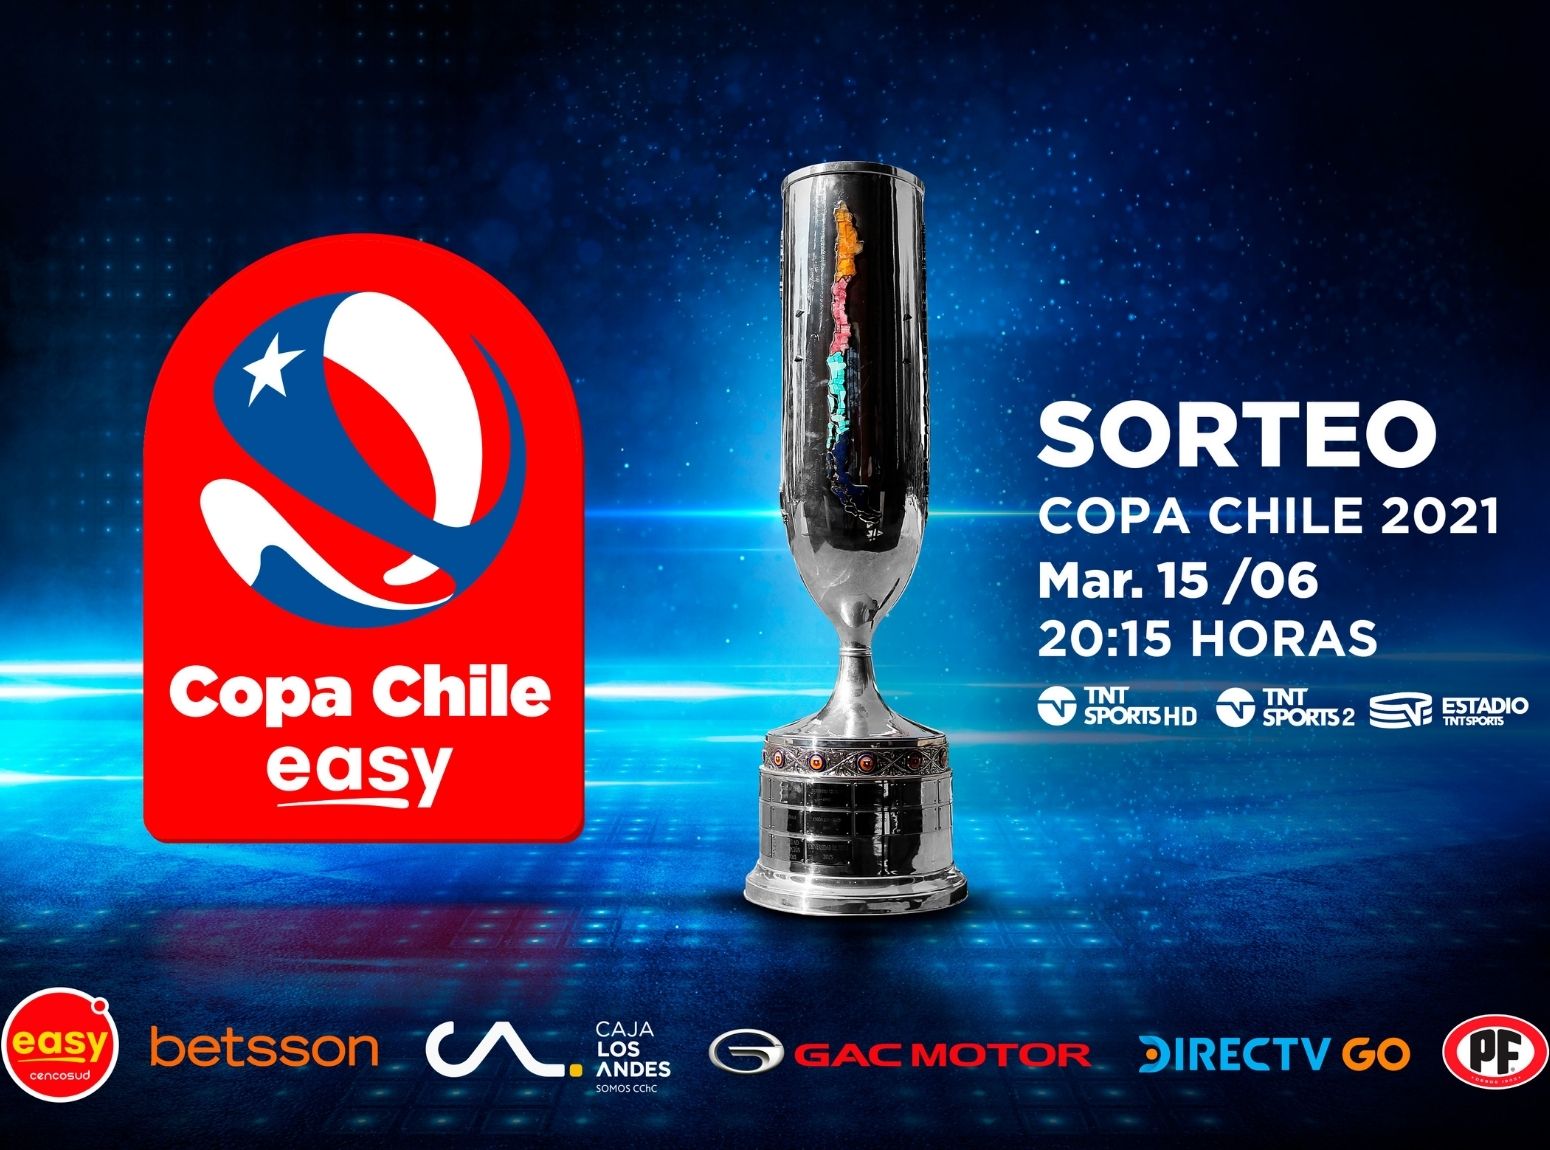 Sorteo Copa Chile 2021 Idjr Ma6jypim / Universidad católica, vigente